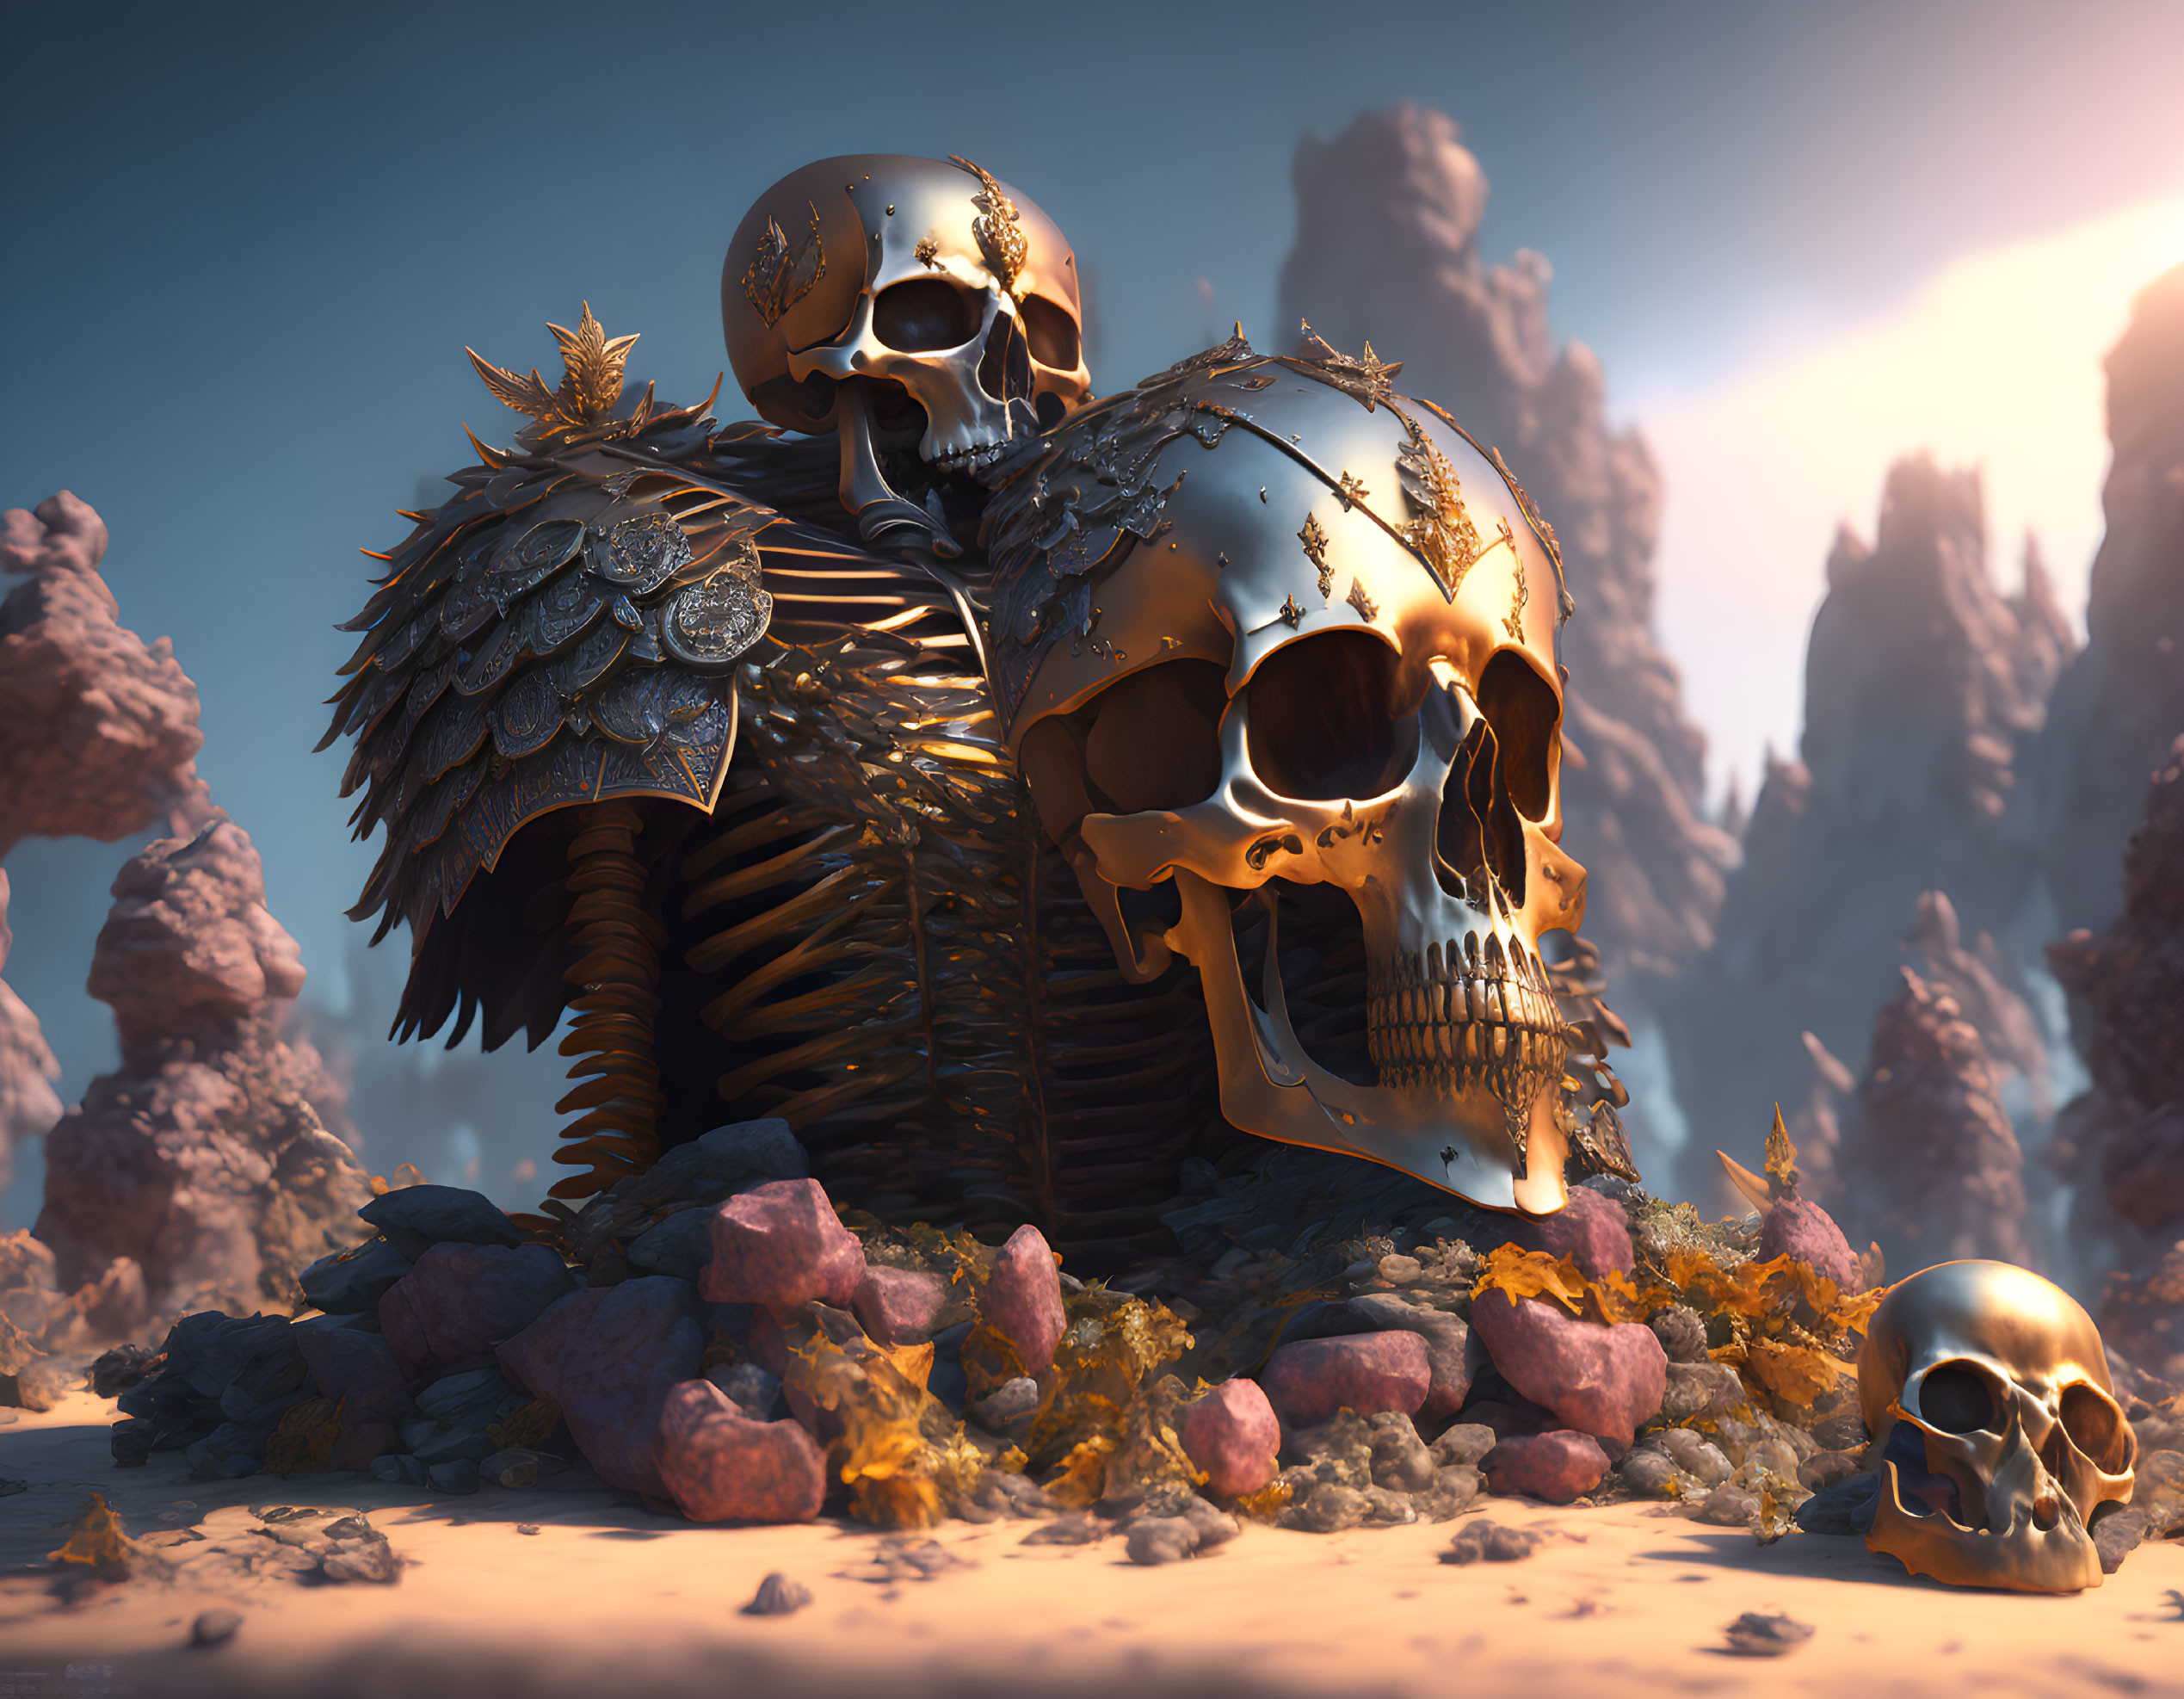 Fantastical landscape with oversized golden skulls in armor amid rocky terrain